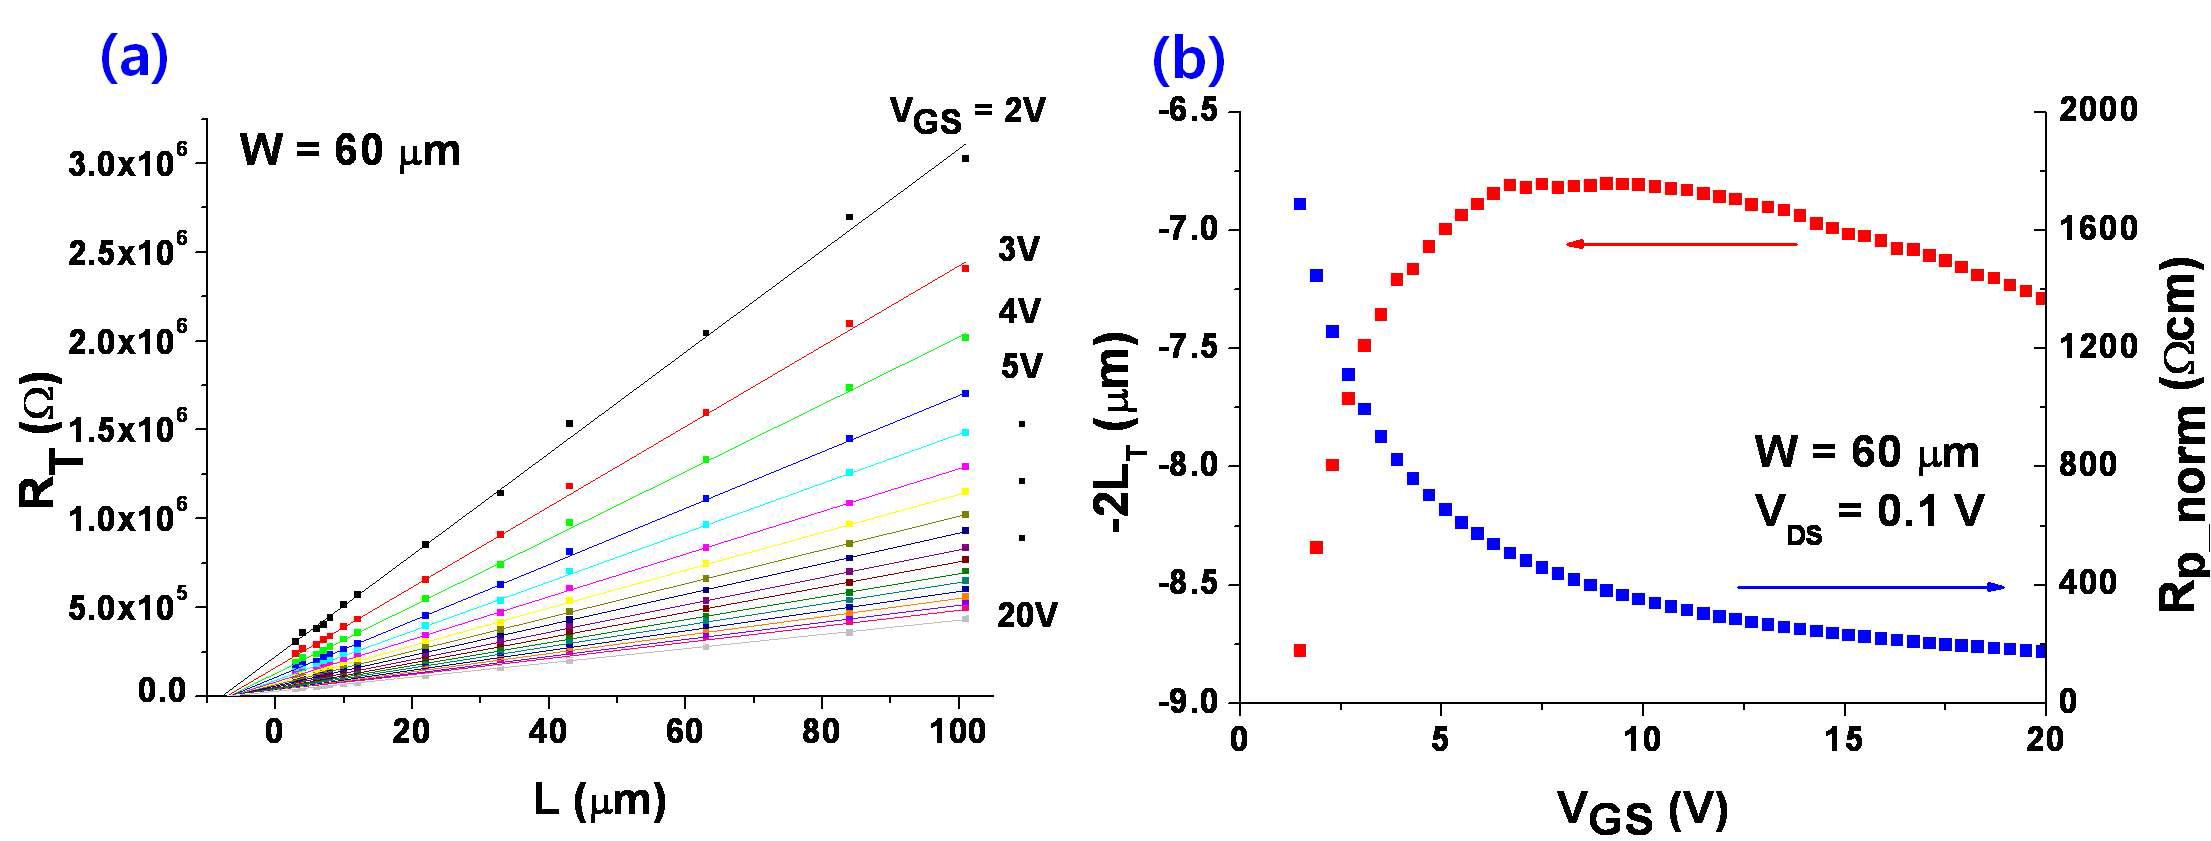 (a) L의 함수로 나타낸 RT, 실선은 RT vs. L의 linear regression plot을 나타냄 (b) VGS 함수로 나타낸 2LT 및 Rp_norm